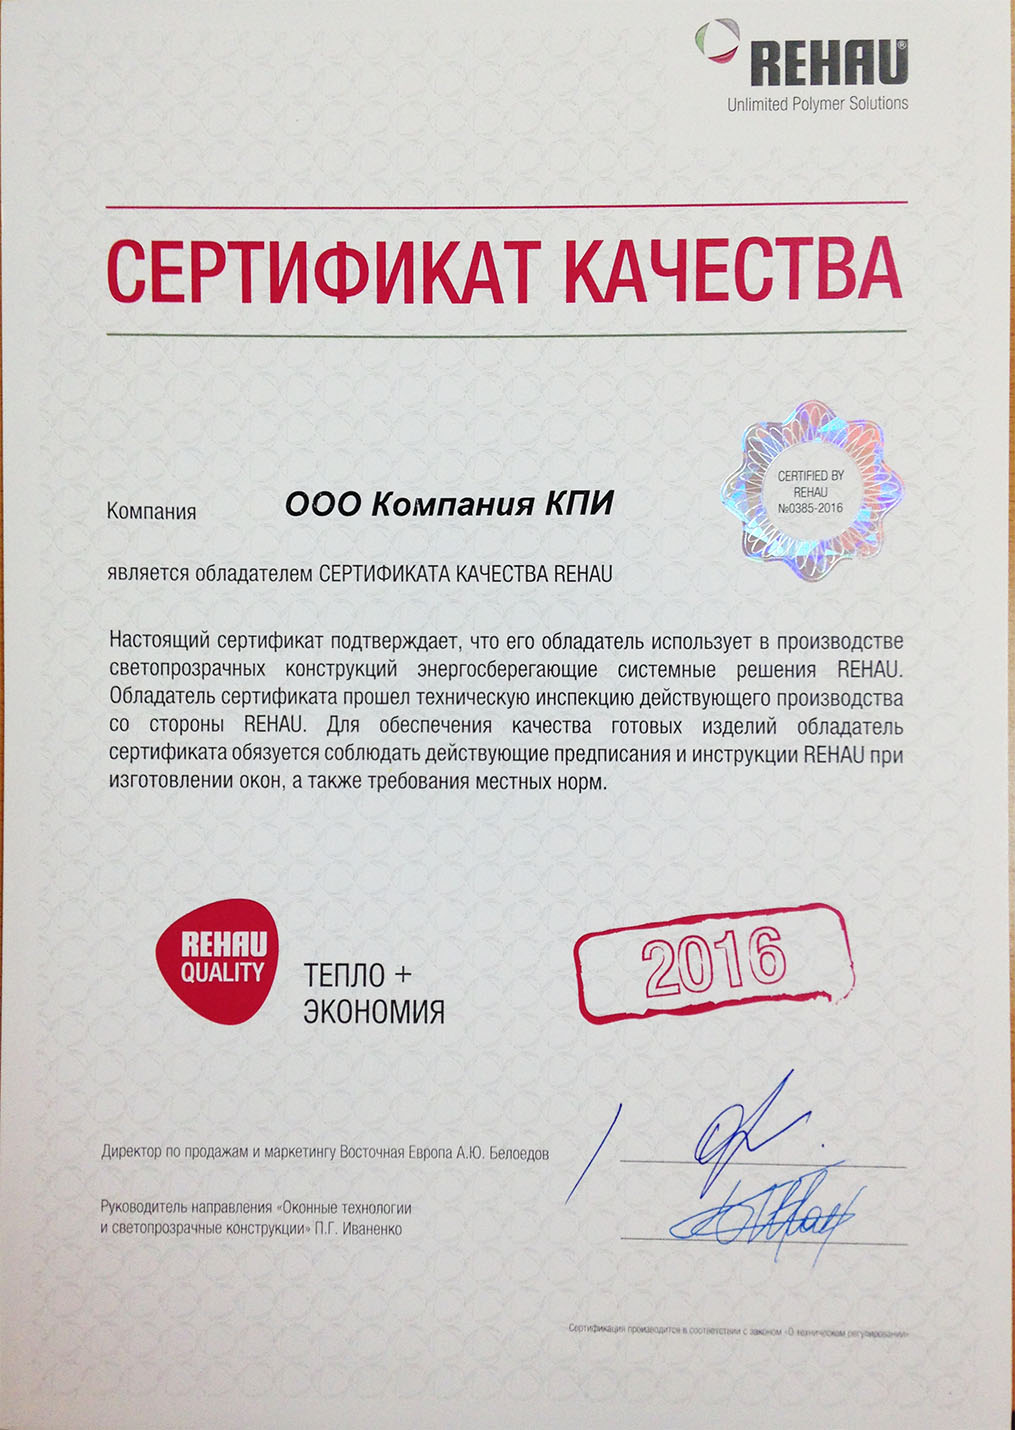 Сертификат качества REHAU